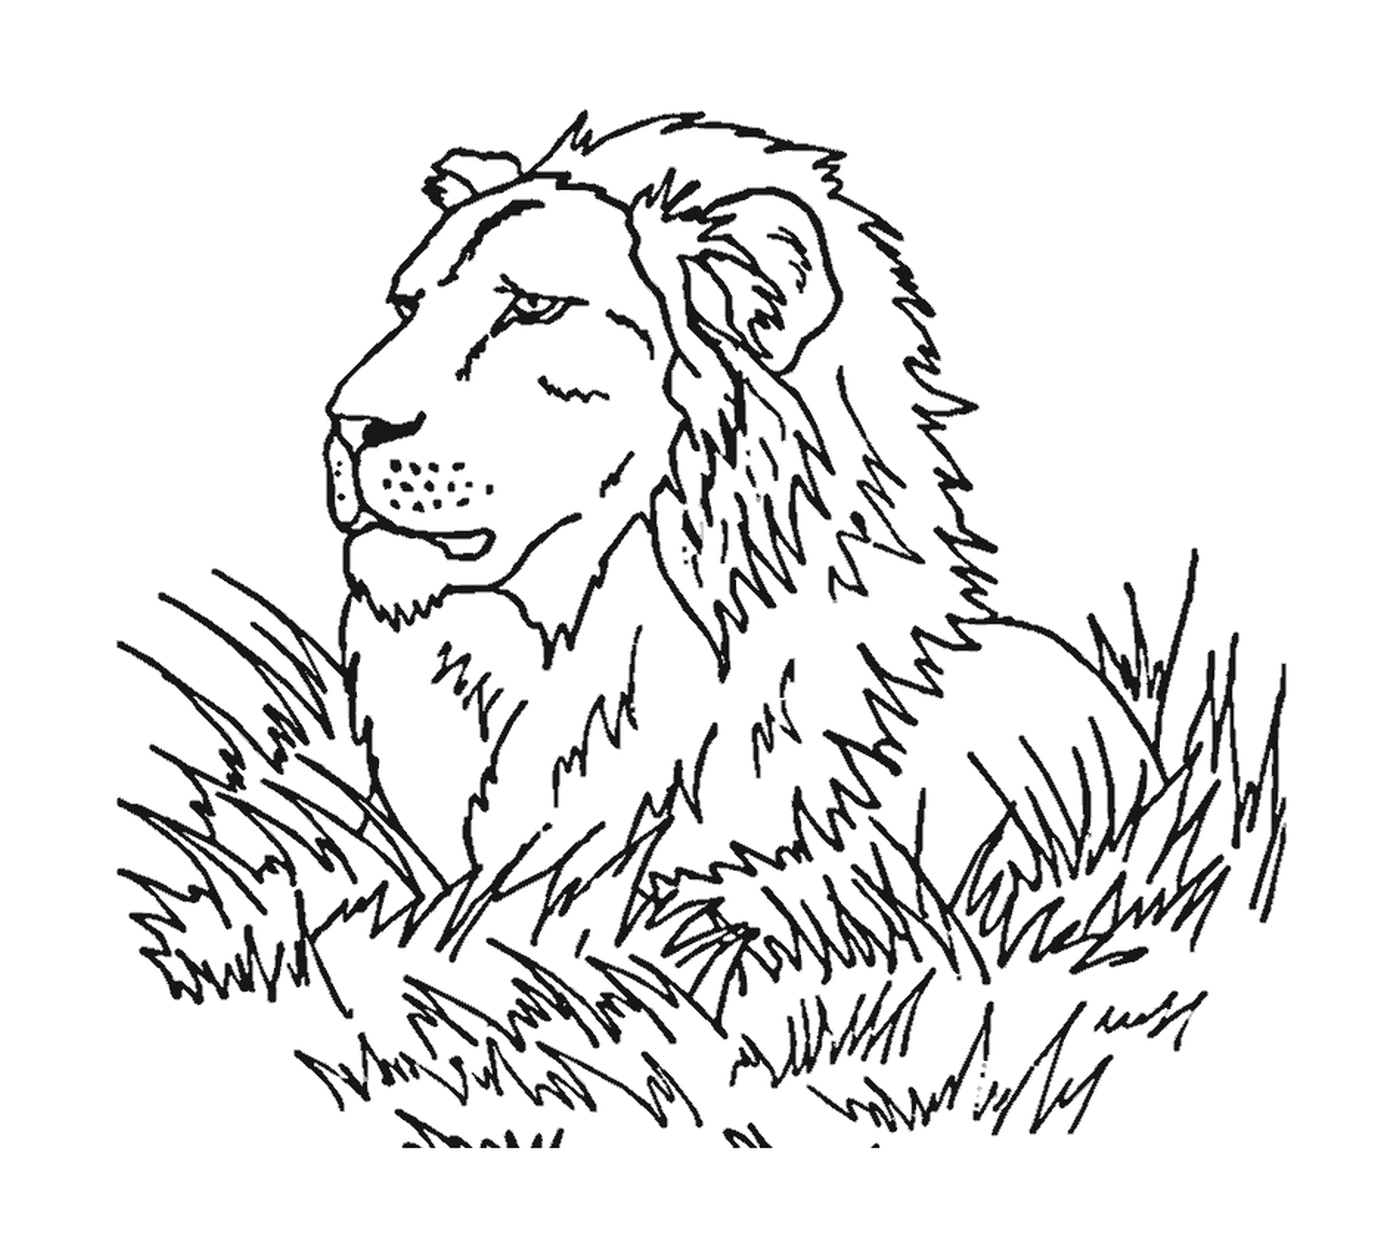  León en la sabana, majestuoso 